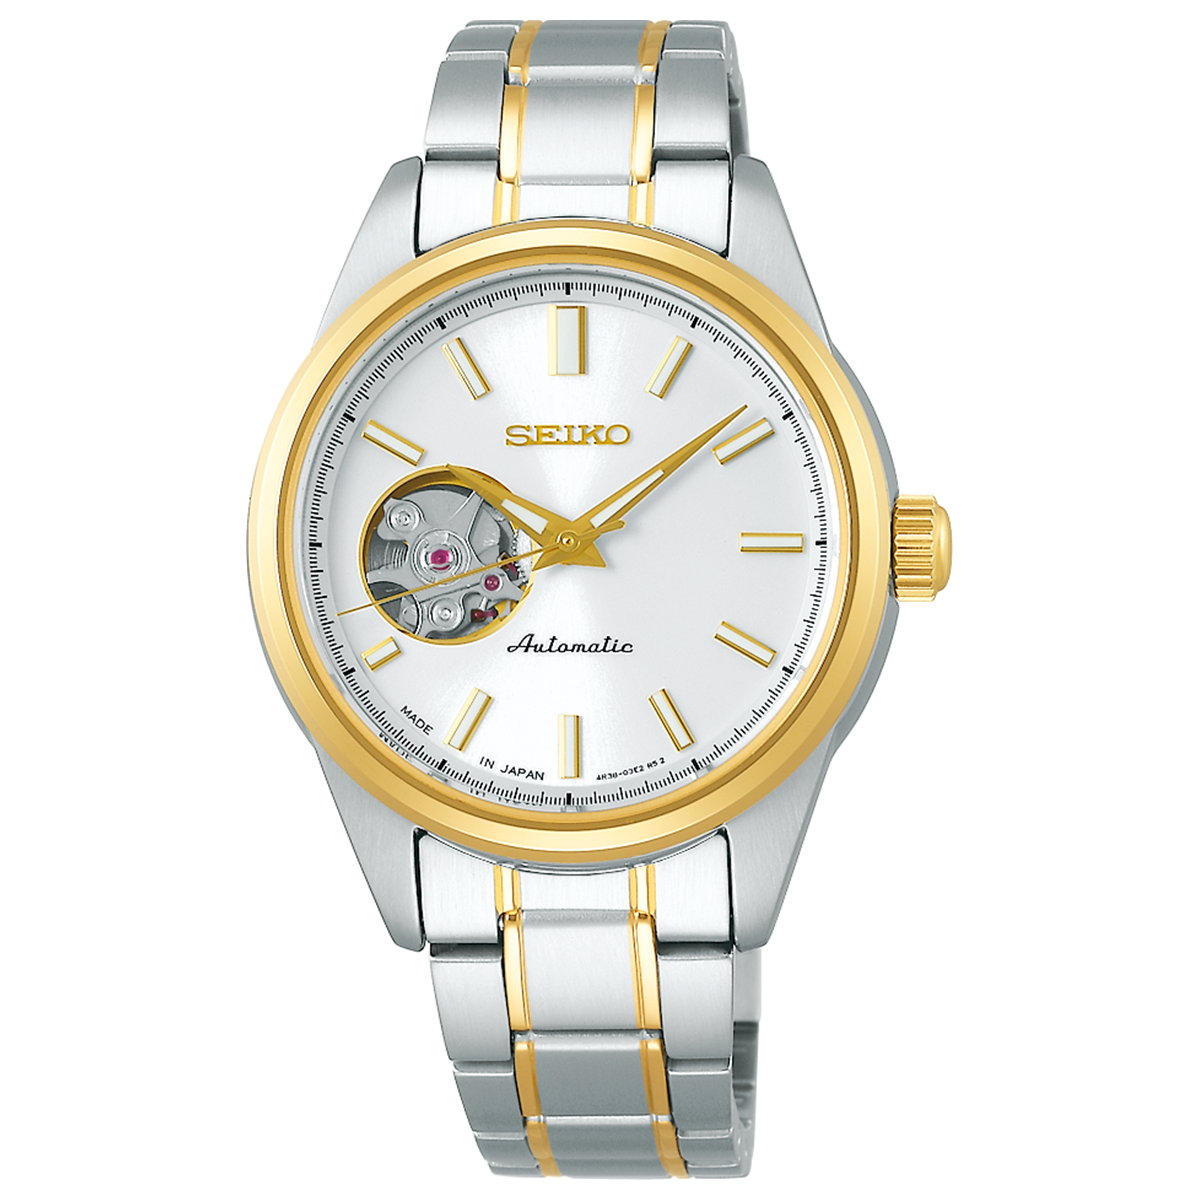 SEIKO[セイコー] SEIKO SELECTION[セイコー セレクション] SSDE008 メカニカル 自動巻き 腕時計 レディース